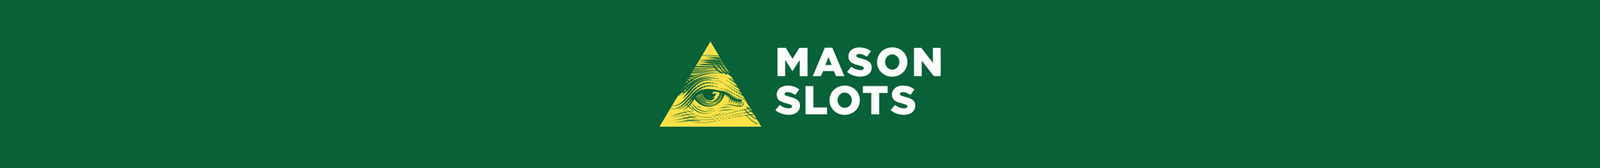 Mason slots